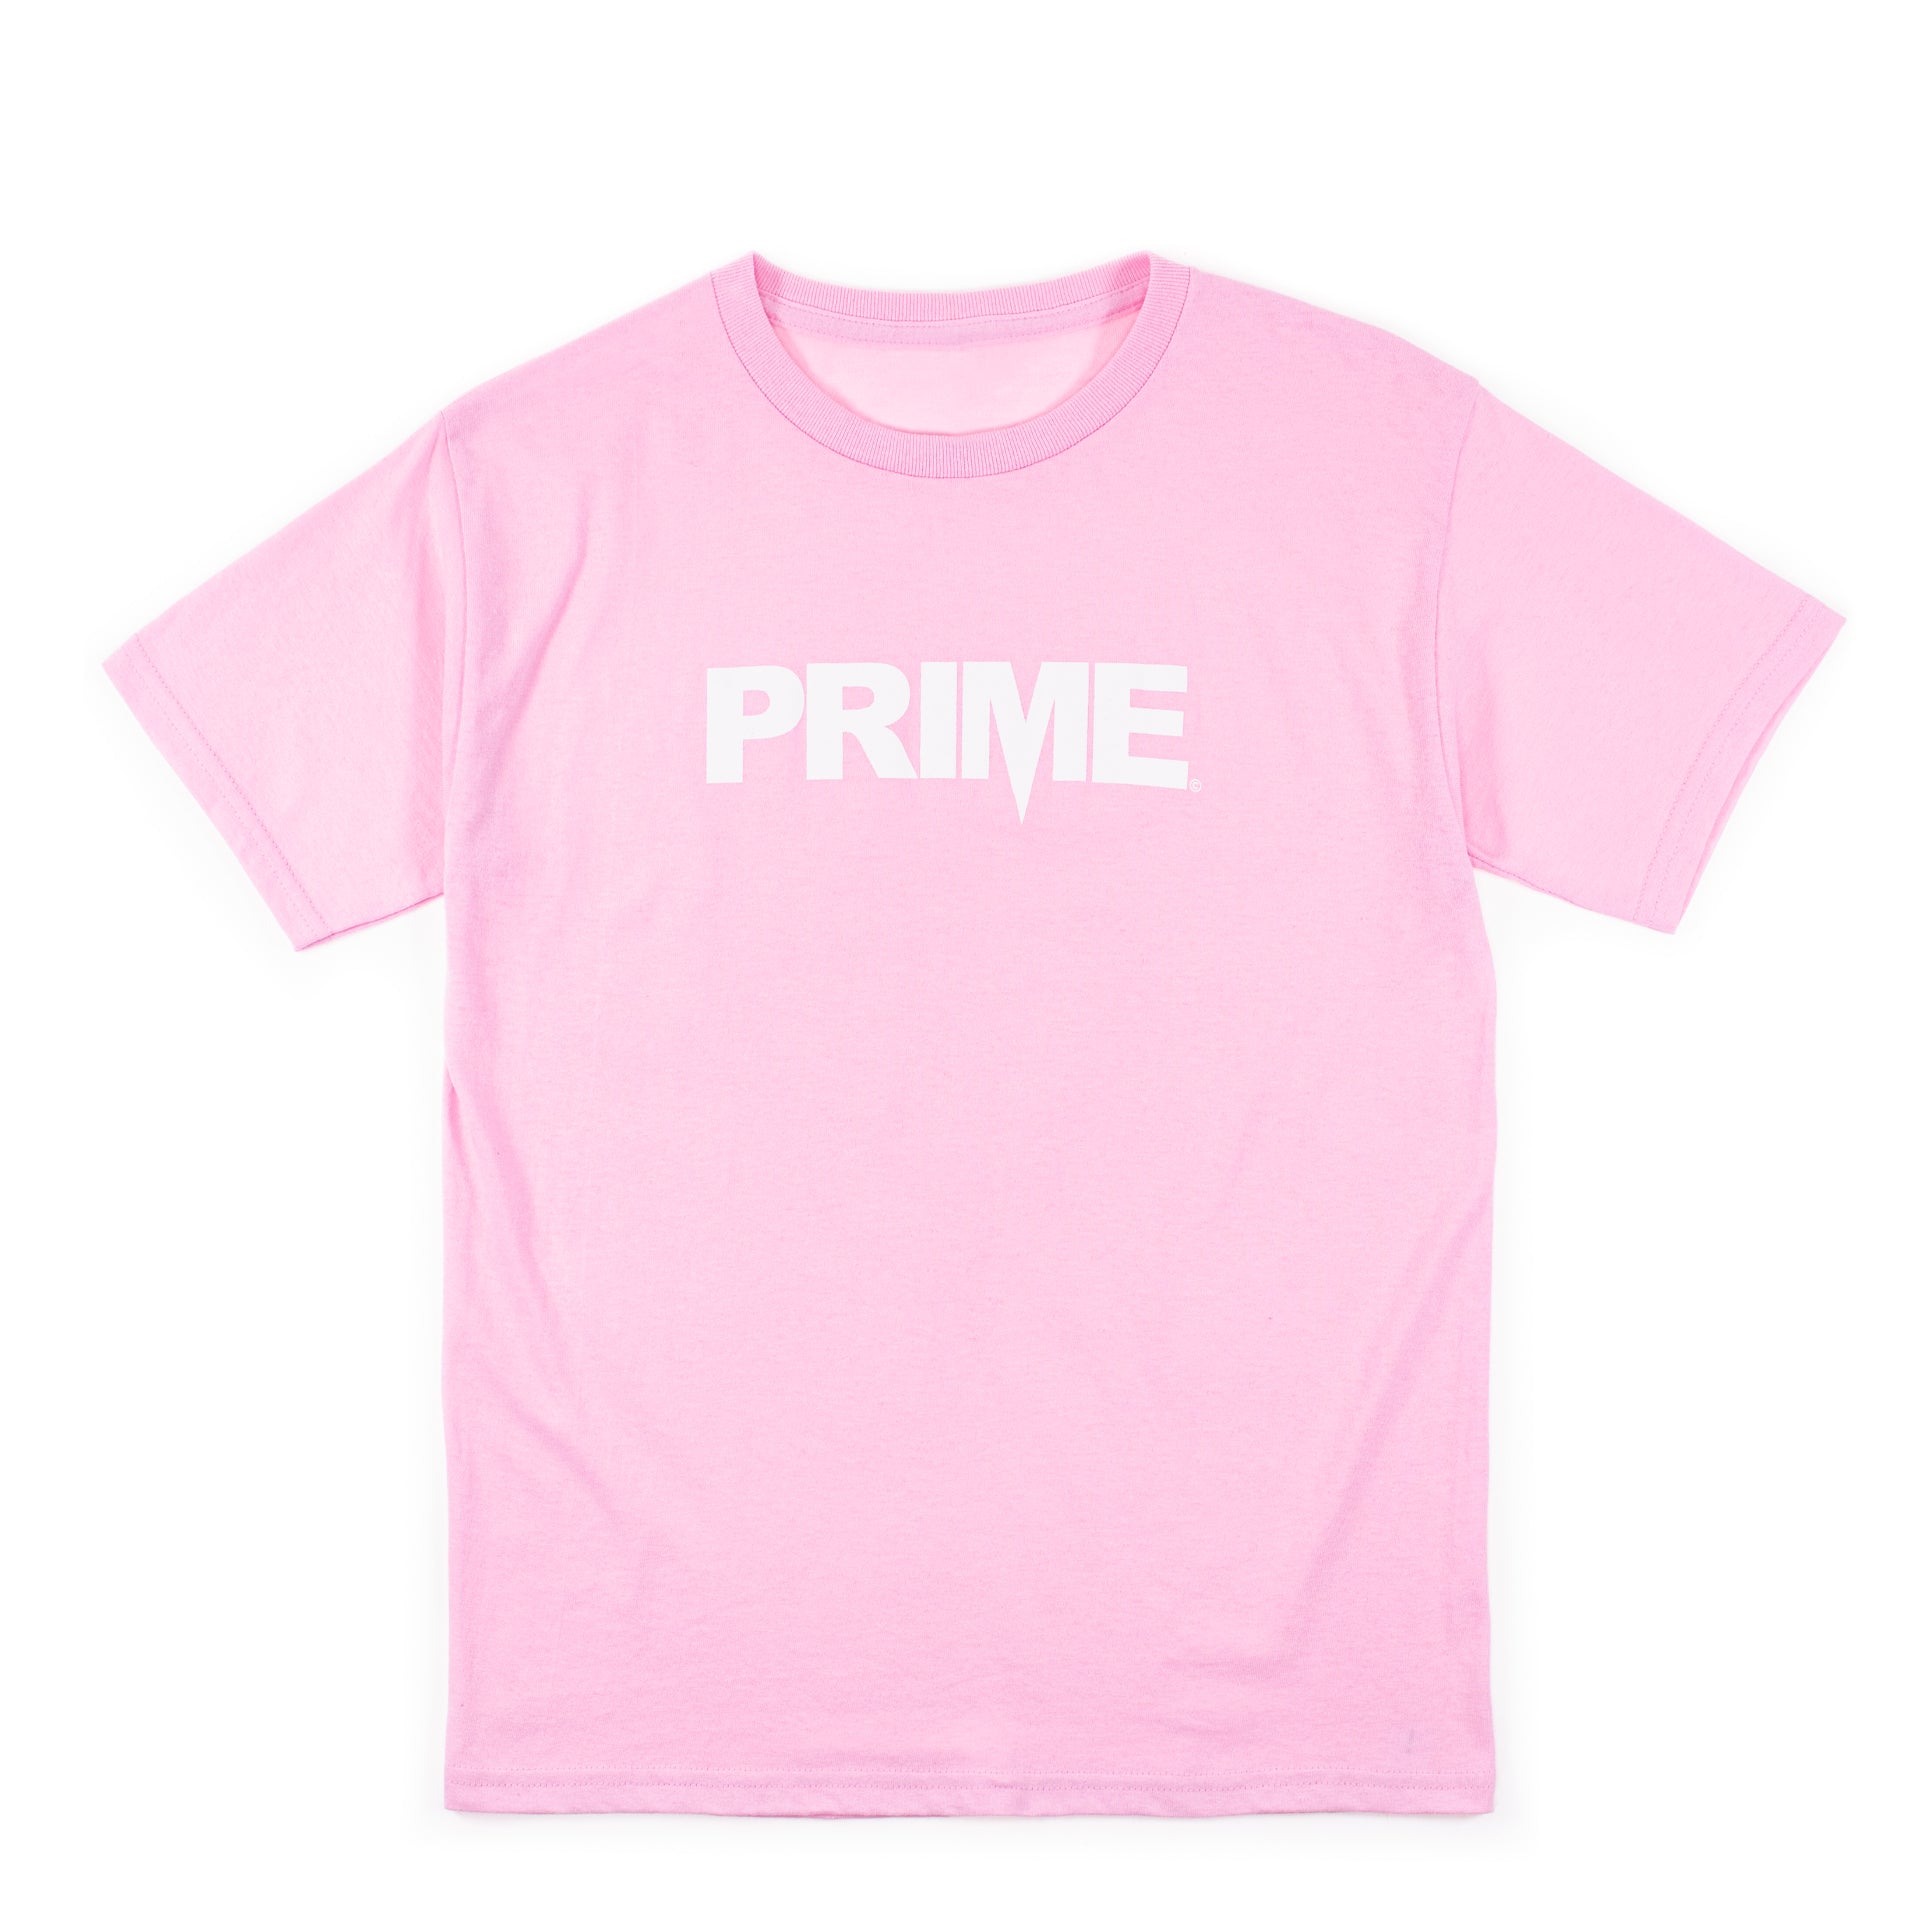 Prime Delux OG Logo Kids T Shirt - Pink / White - Prime Delux Store